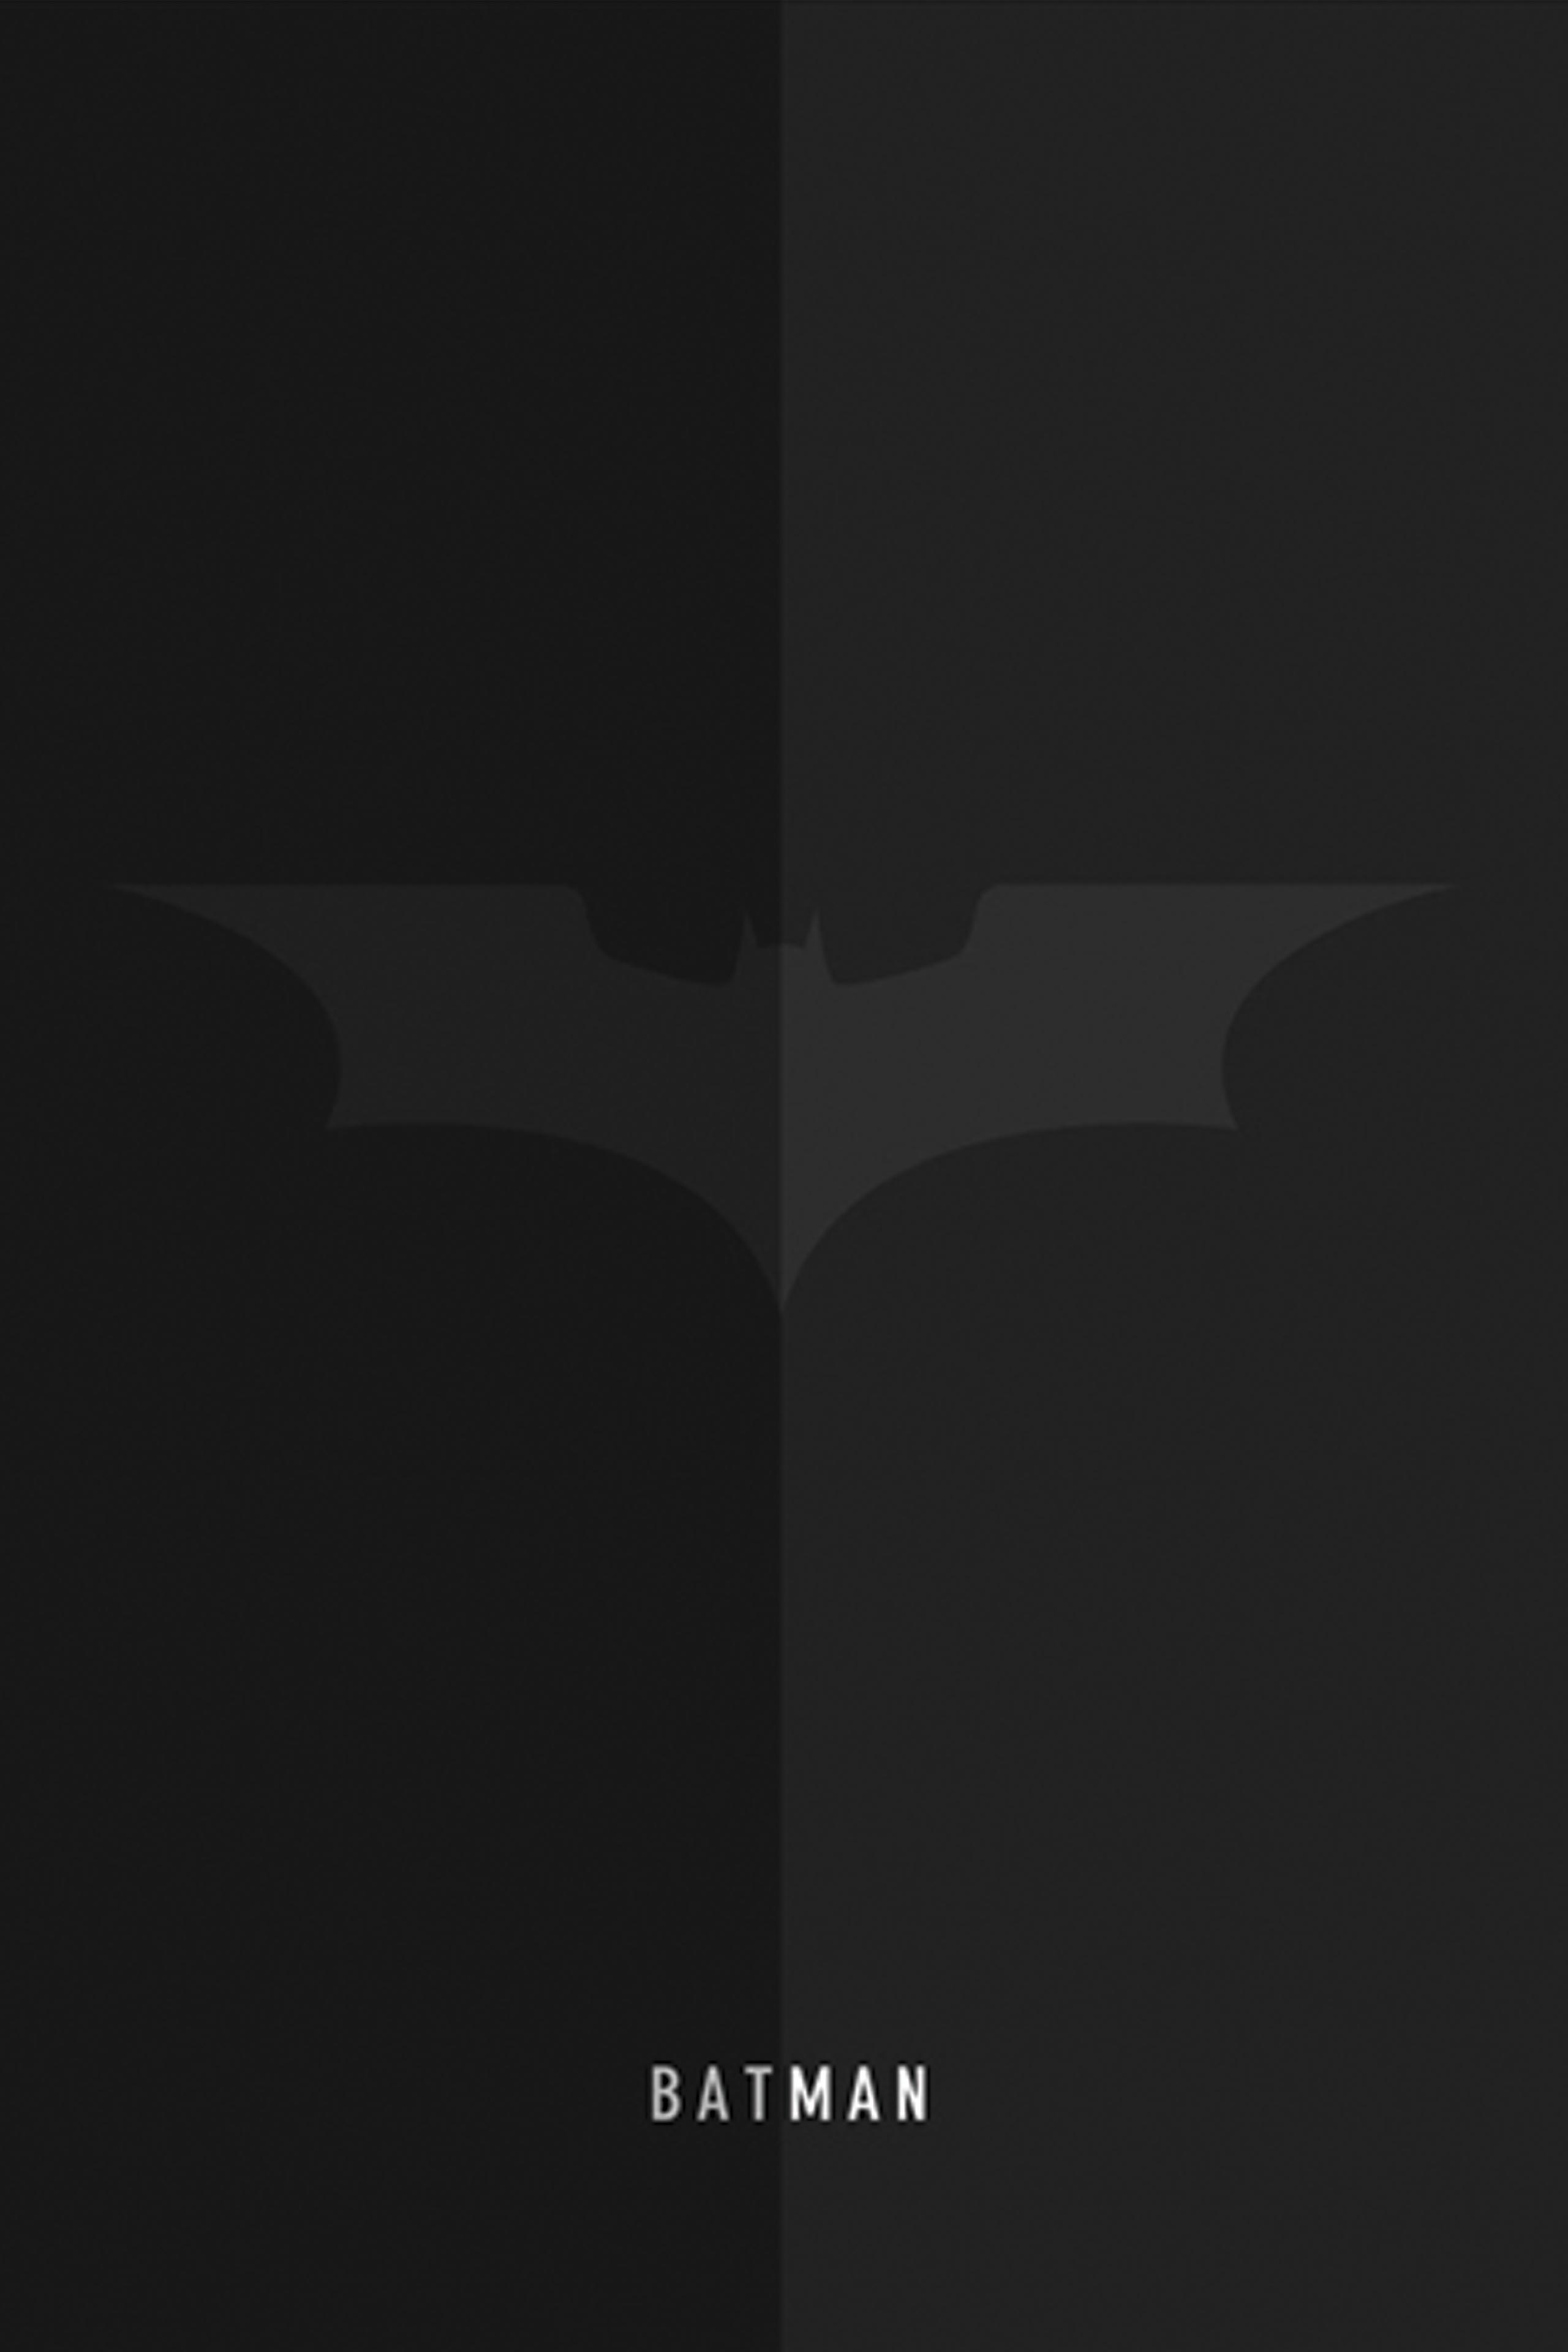 Batman Wallpaper iPhone 7 Plus